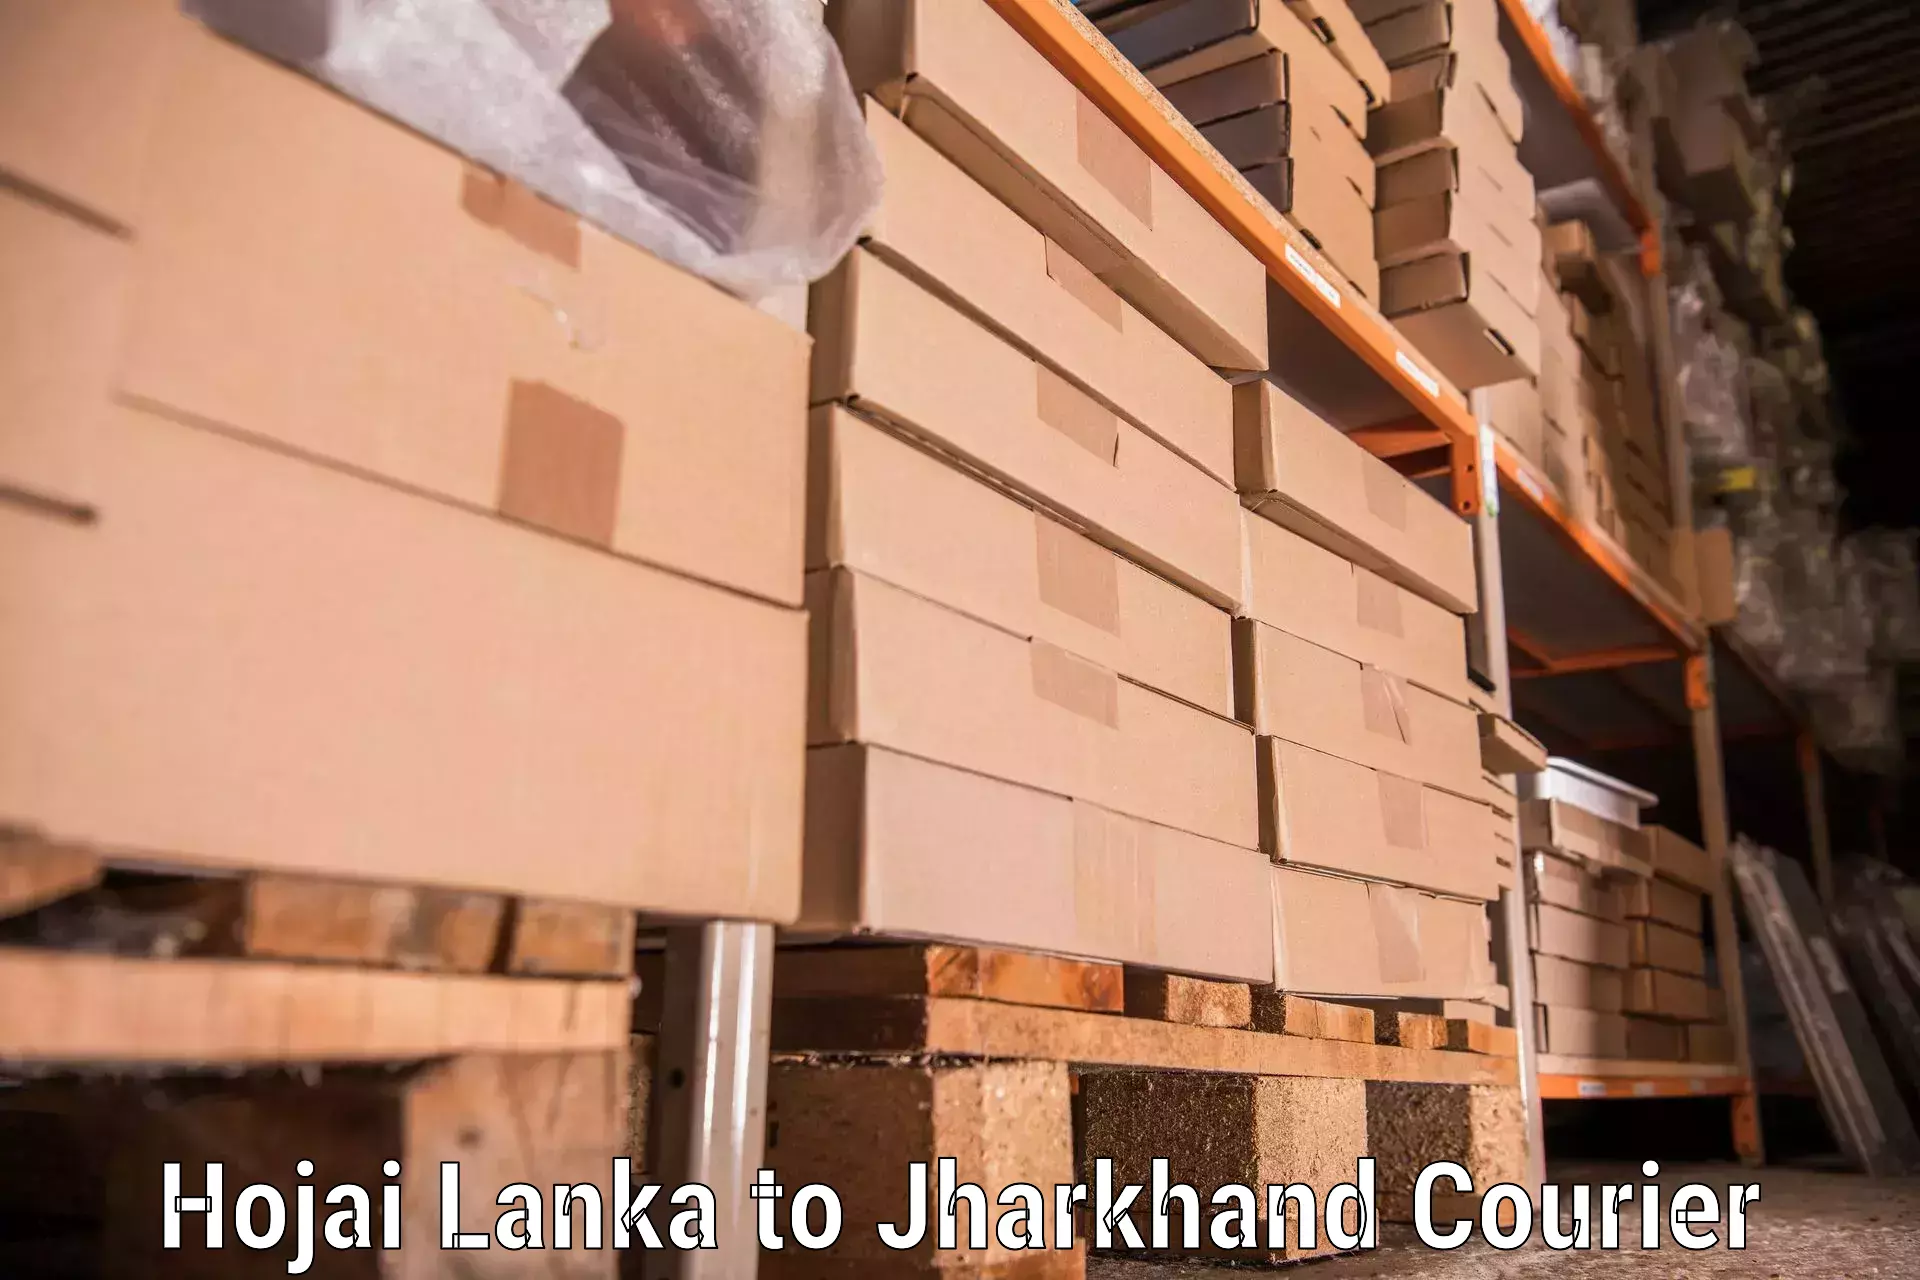 Home goods moving company Hojai Lanka to Jharia